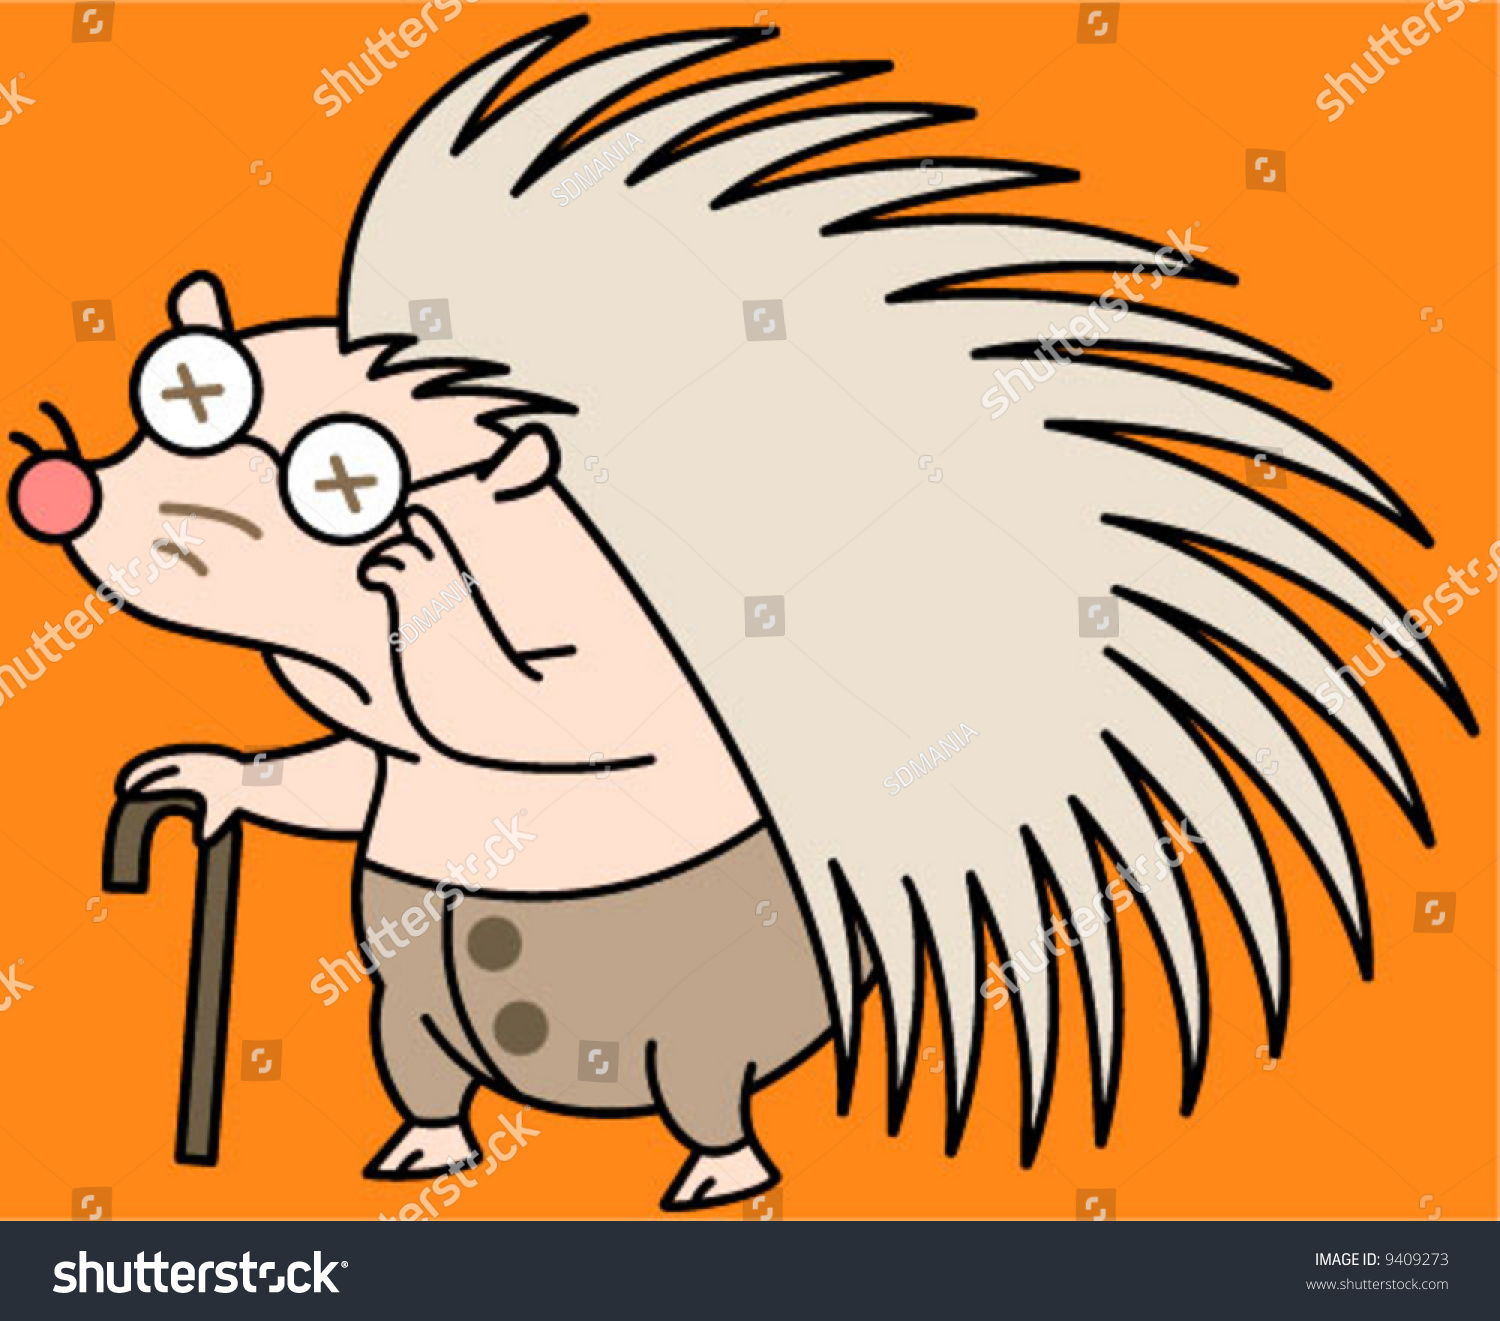 Porcupine Cartoon Stock Vector 9409273 - Shutterstock